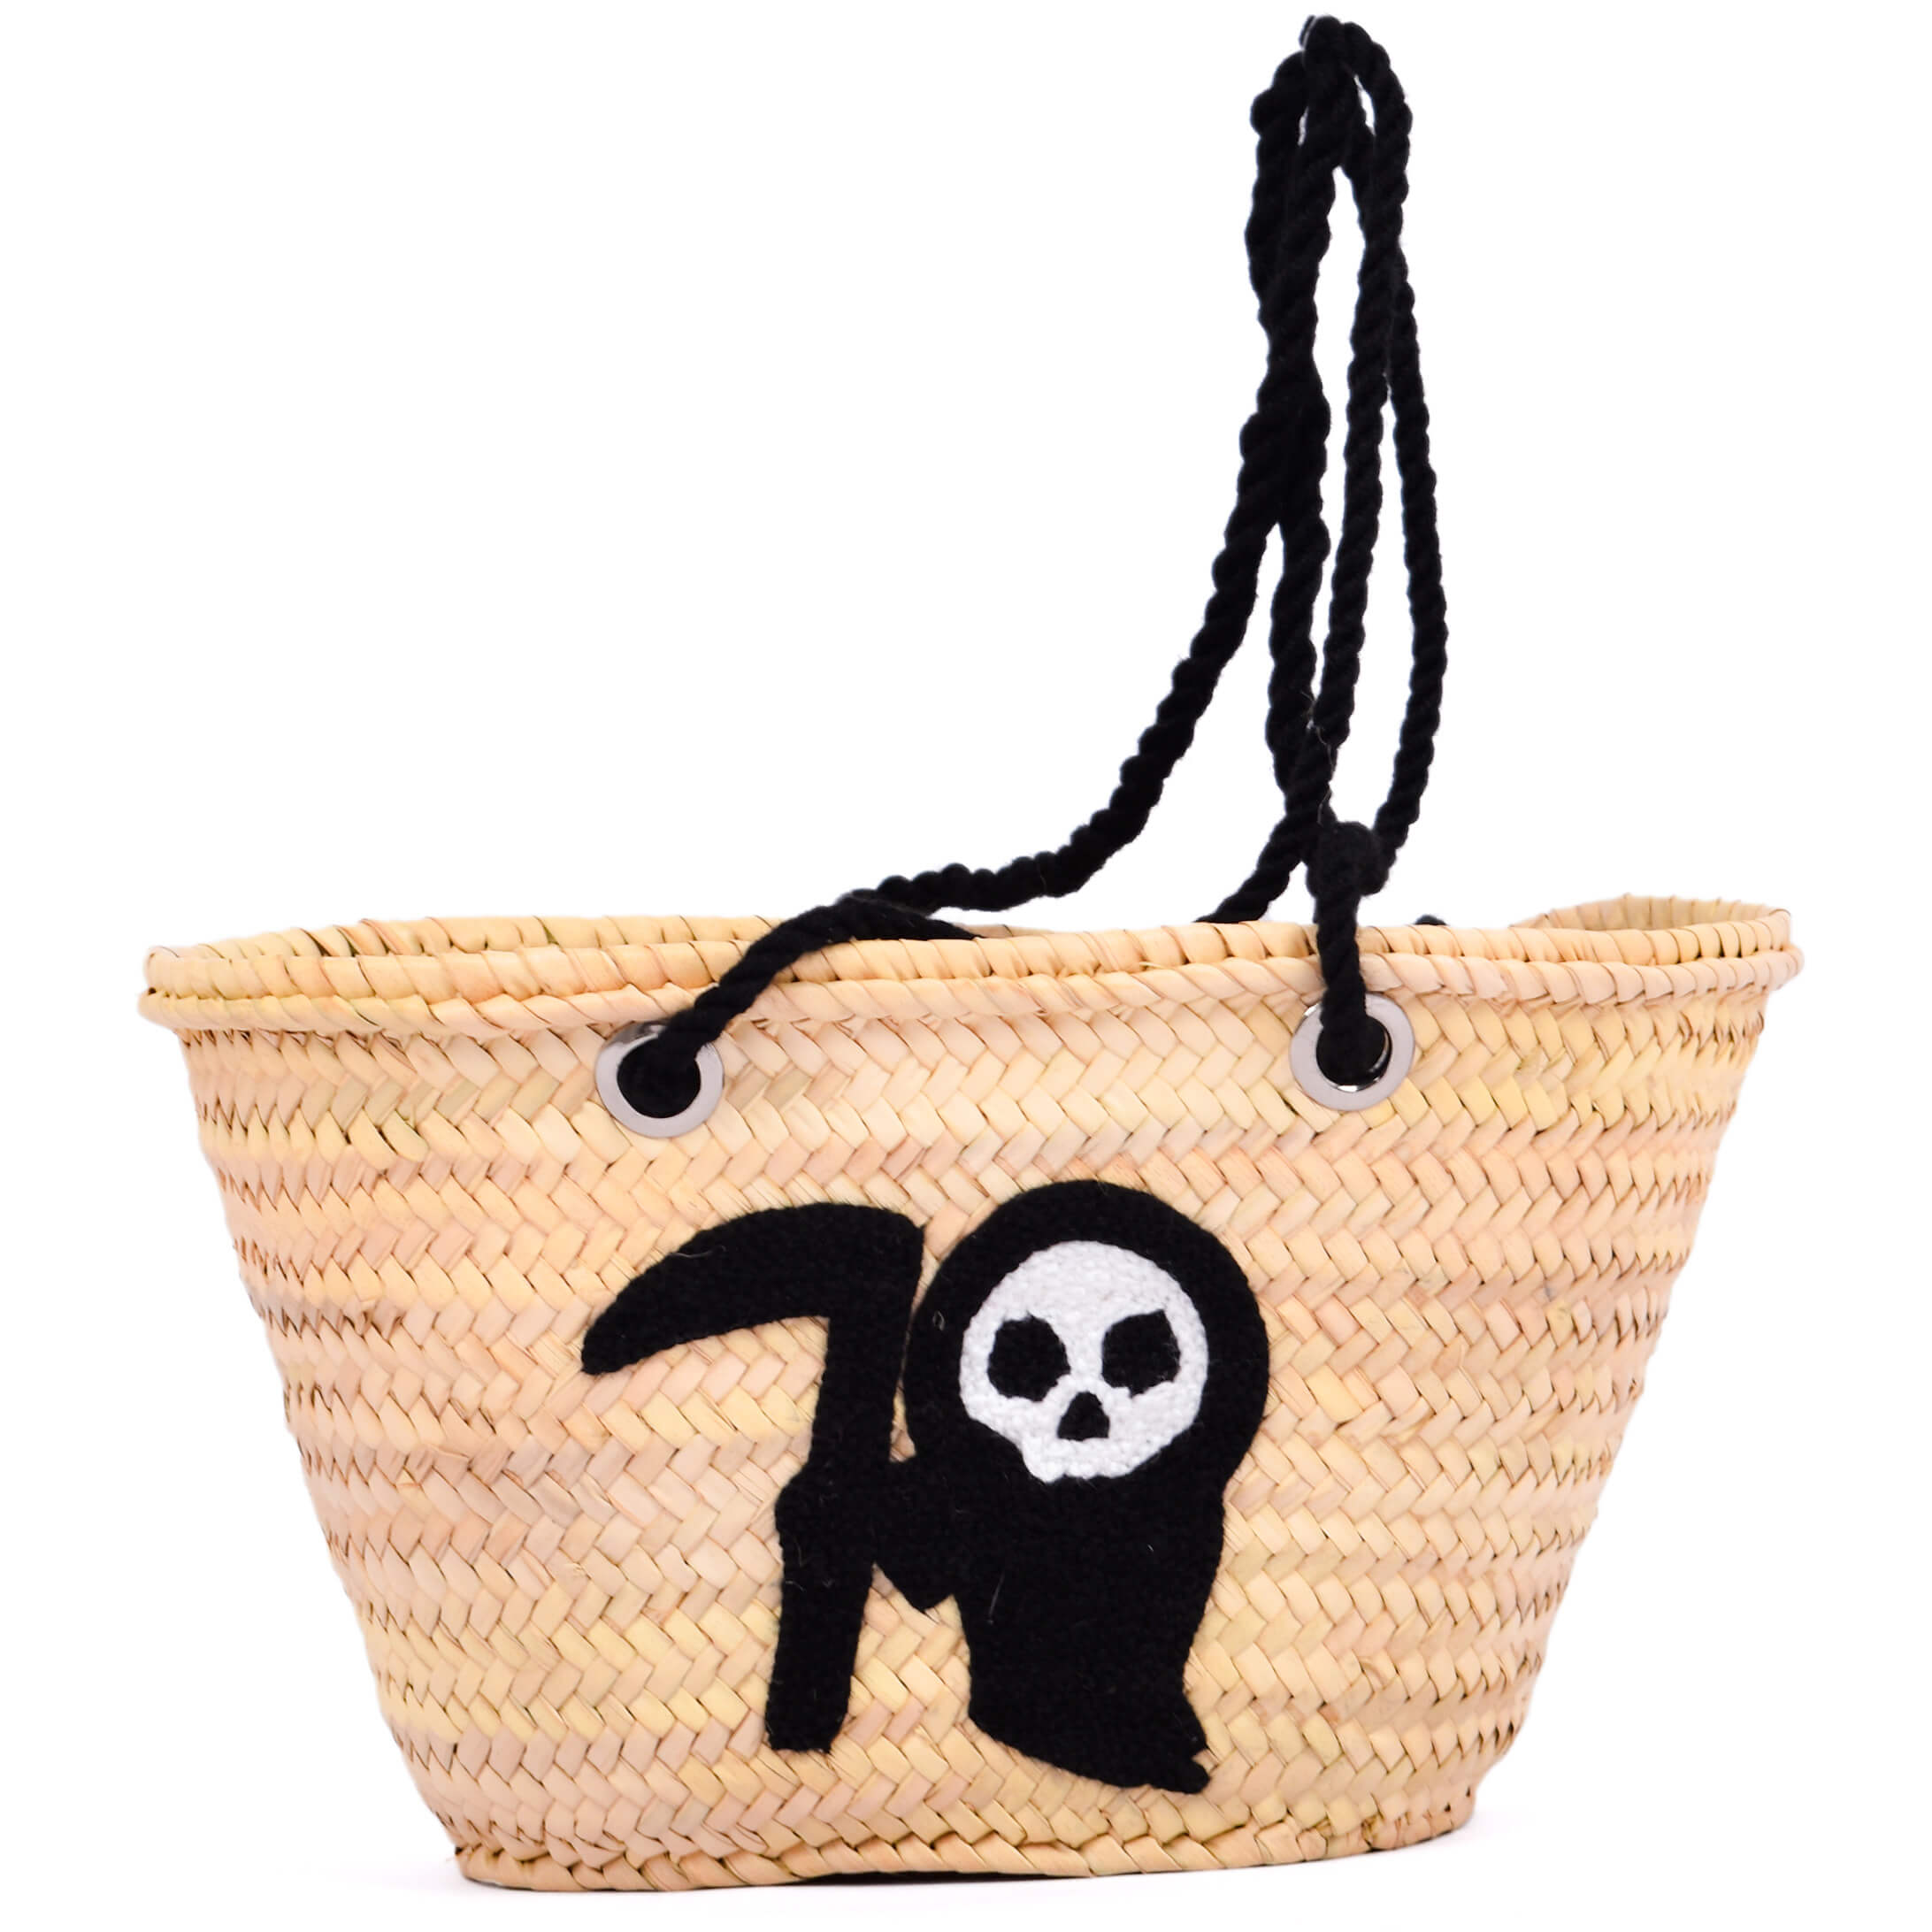 Grim Reaper Halloween basket - Personalized gift